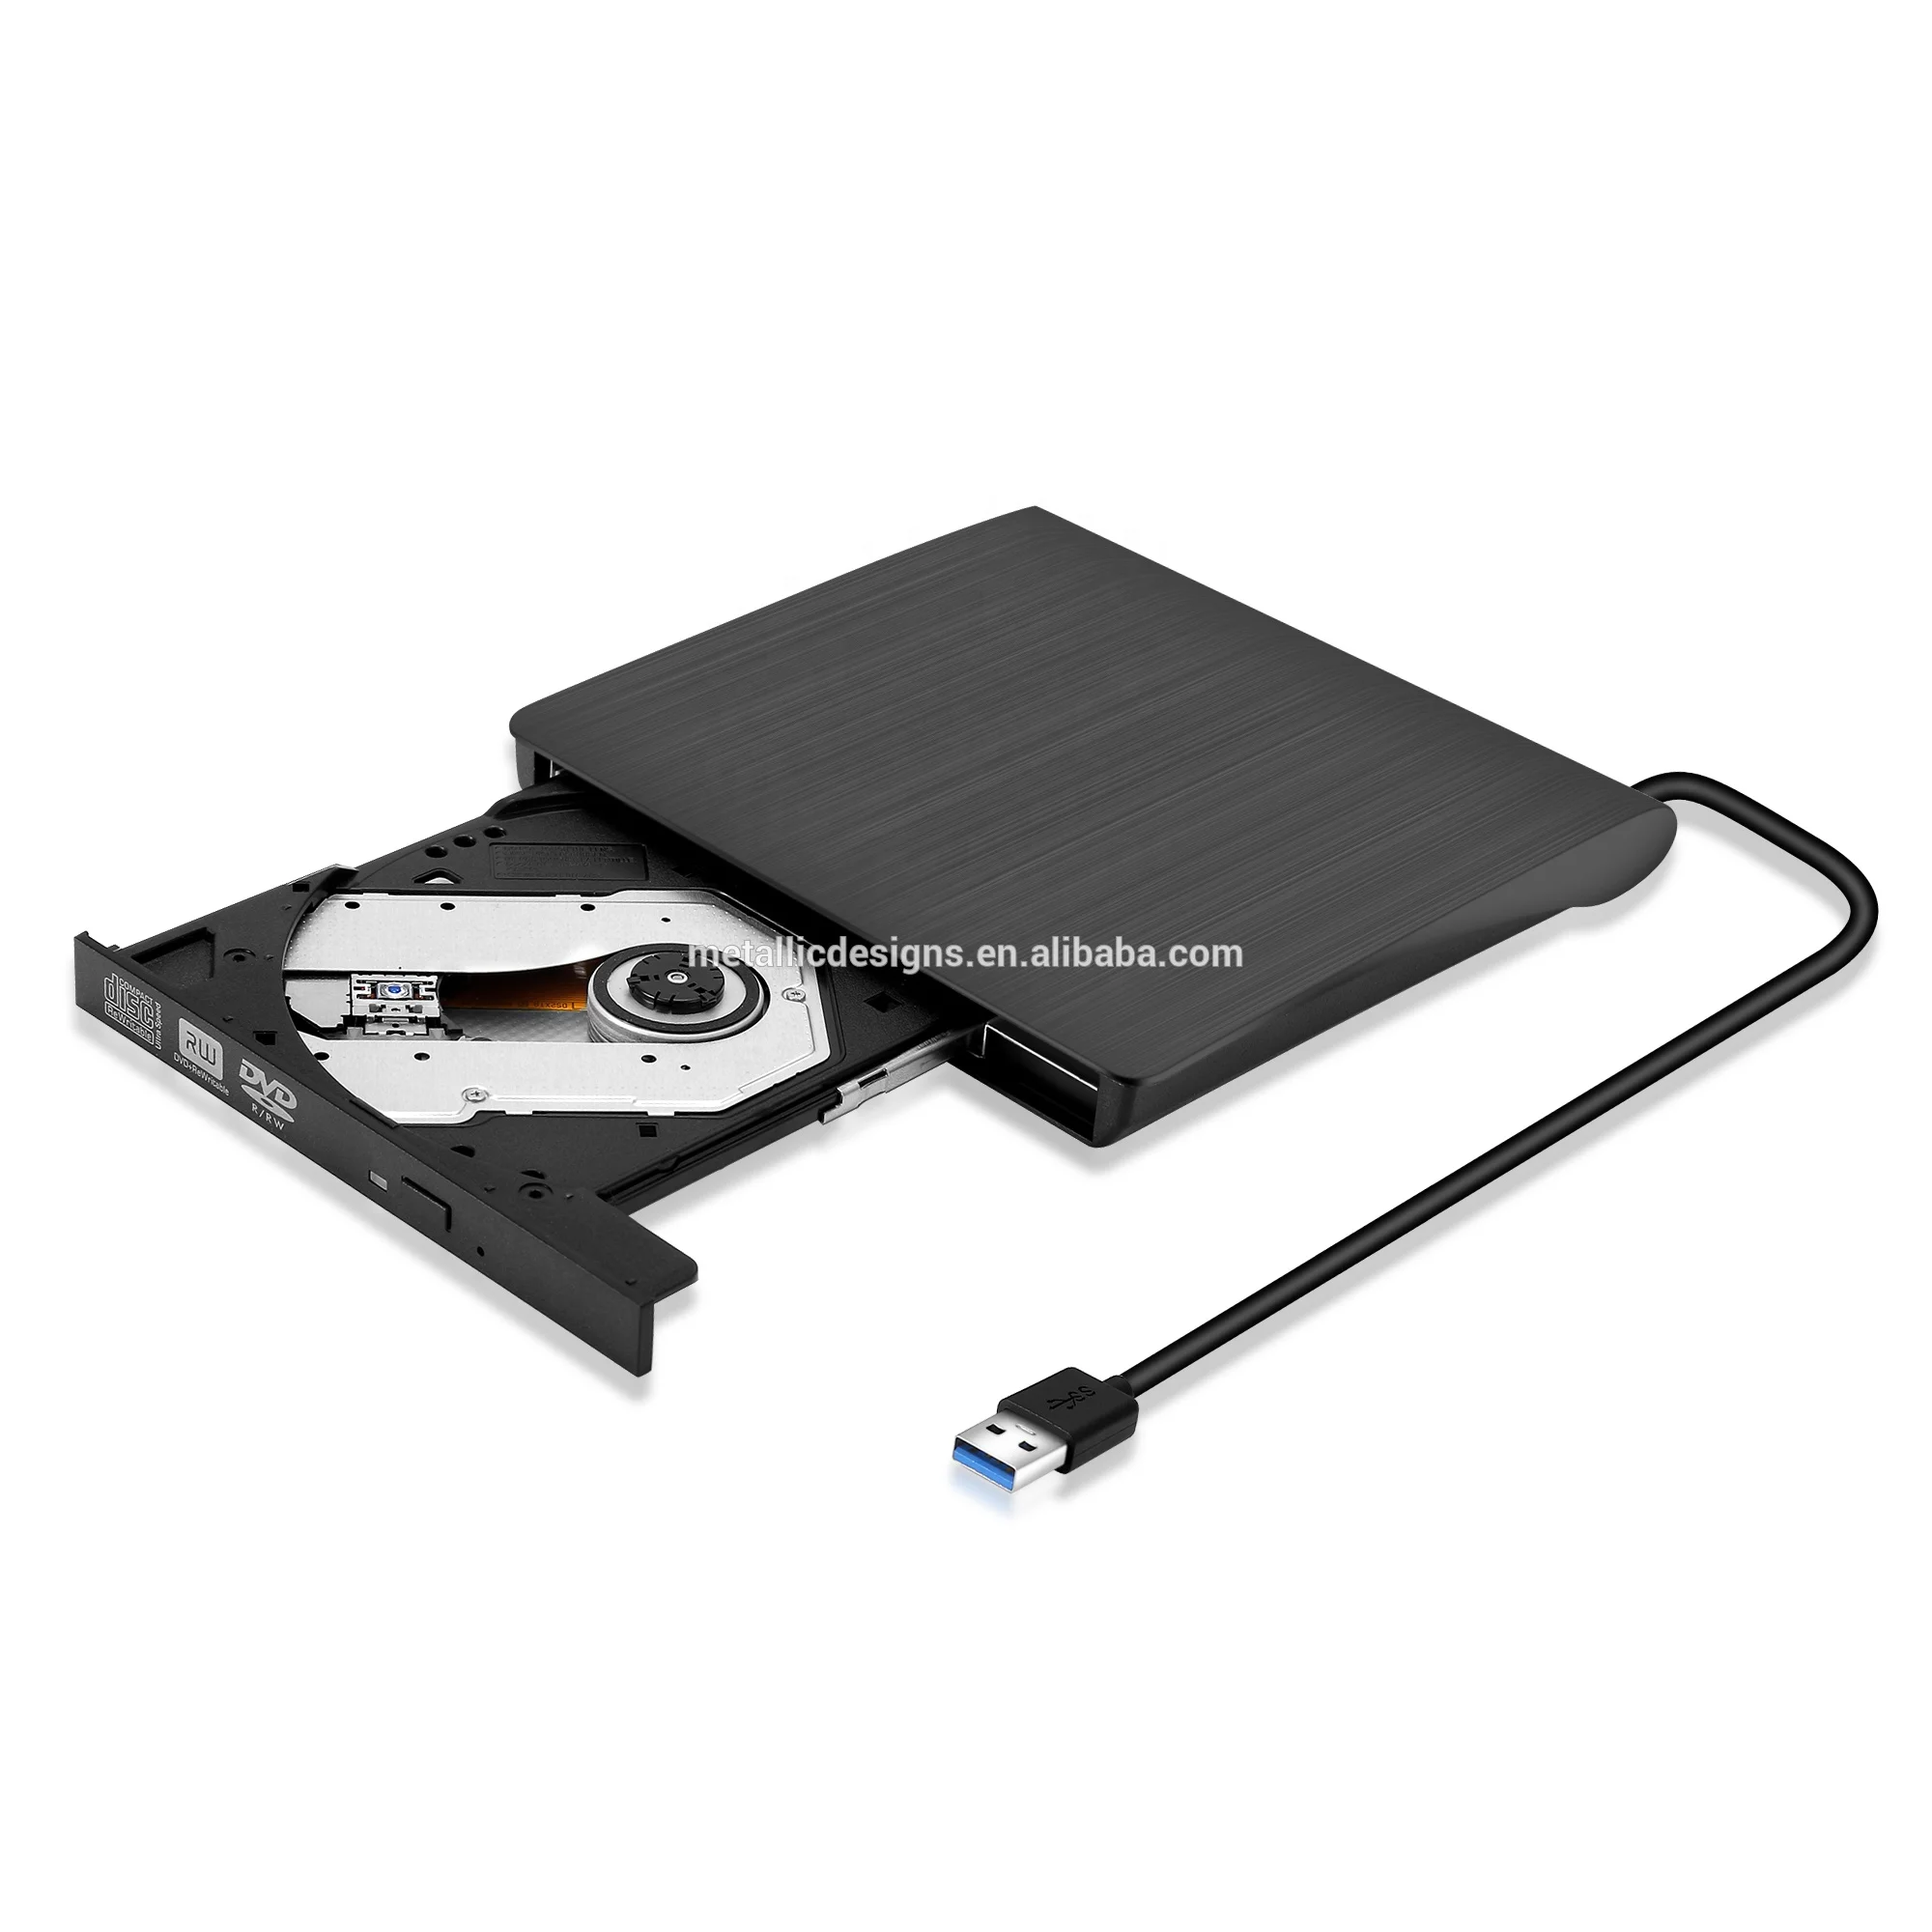 

USB 3.0 External CD Drive Portable Slim DVD Optical Drive RW ROM Rewriter Burner Writer/Player for MacBook Pro/ PC Win 7/8.1/10